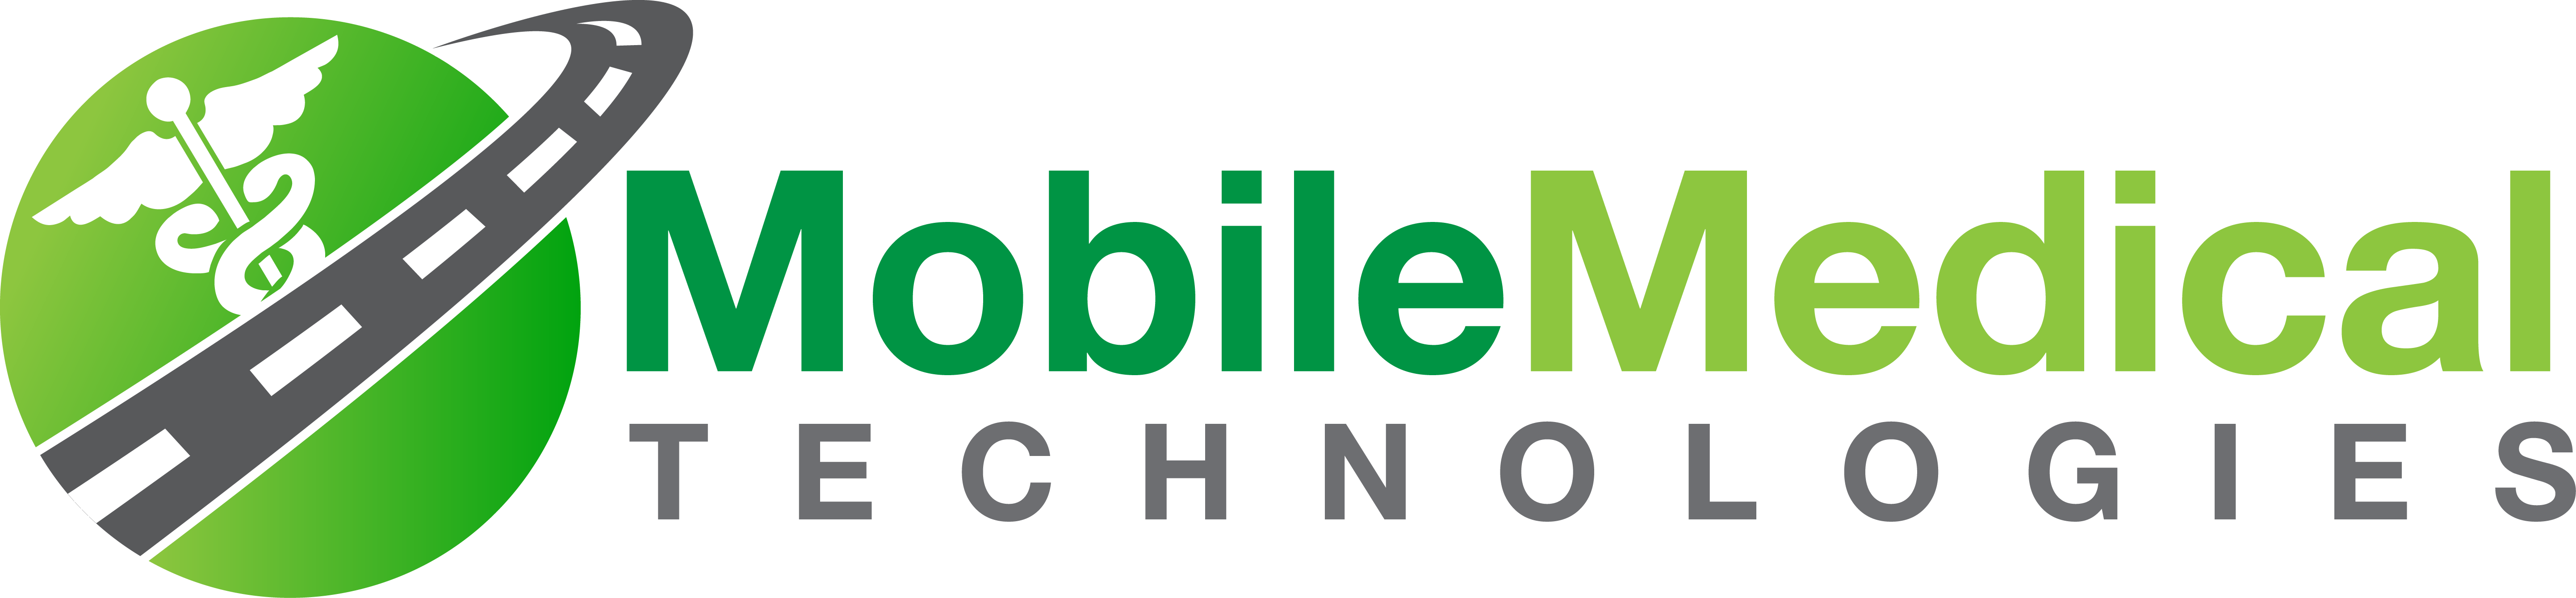 Mobile Medical Technology